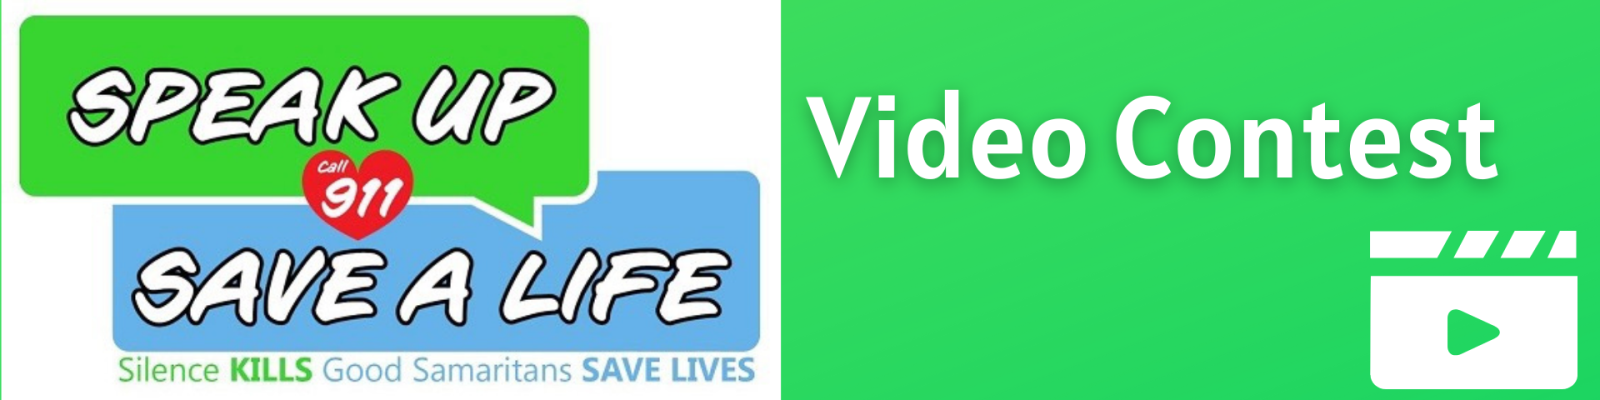 Speak Up Save A Life Video Contest Logo